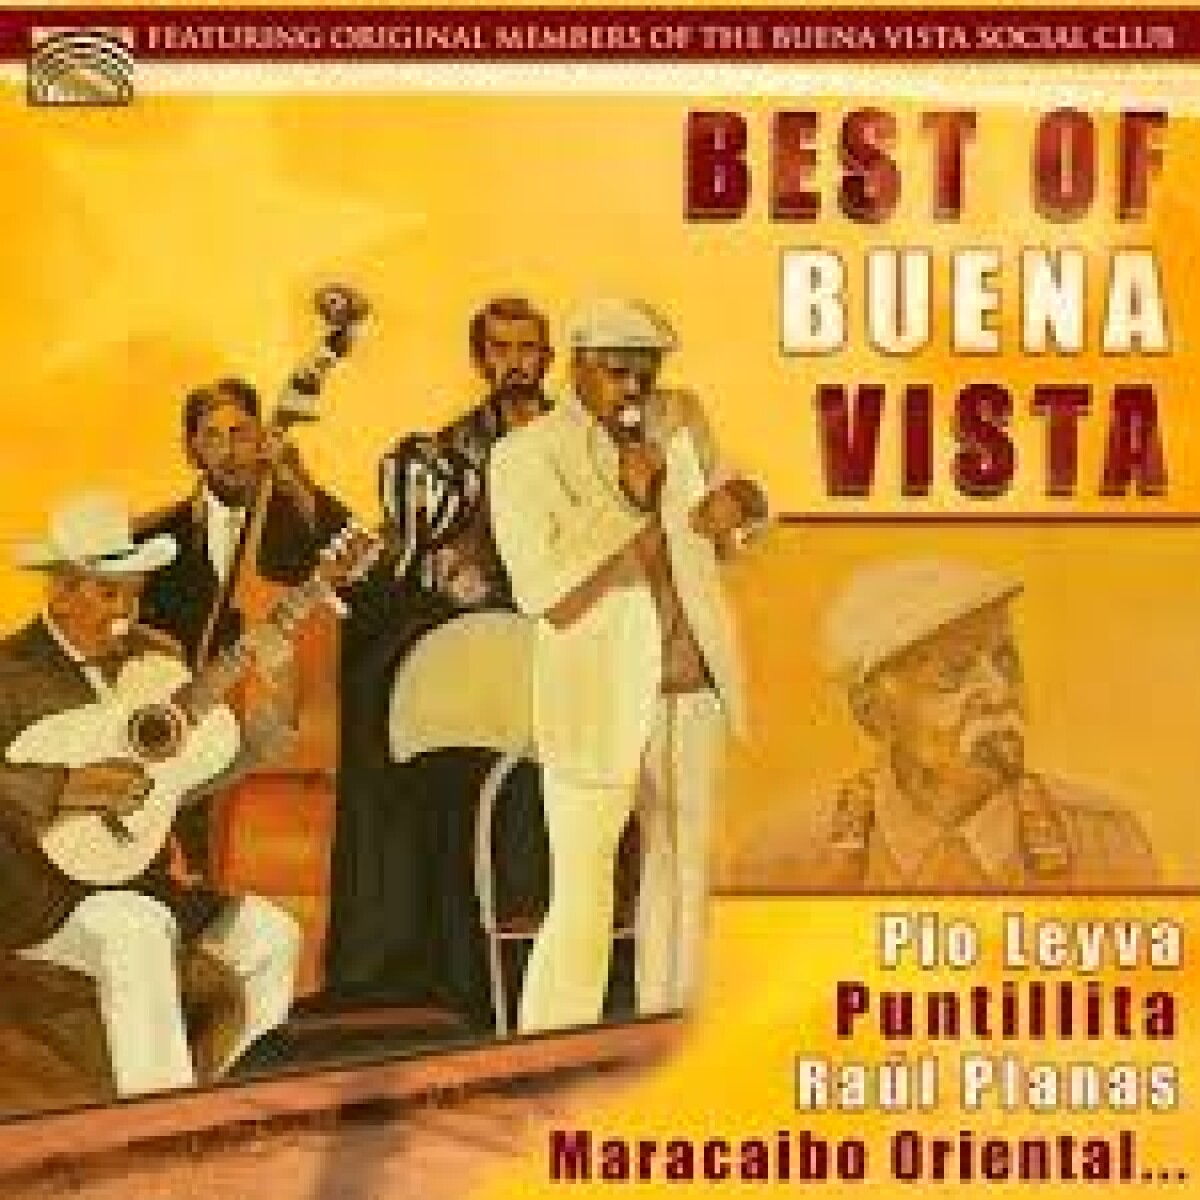 (l) Corona-frank-calzado-annalays-best Of Buena Vi - Vinilo 